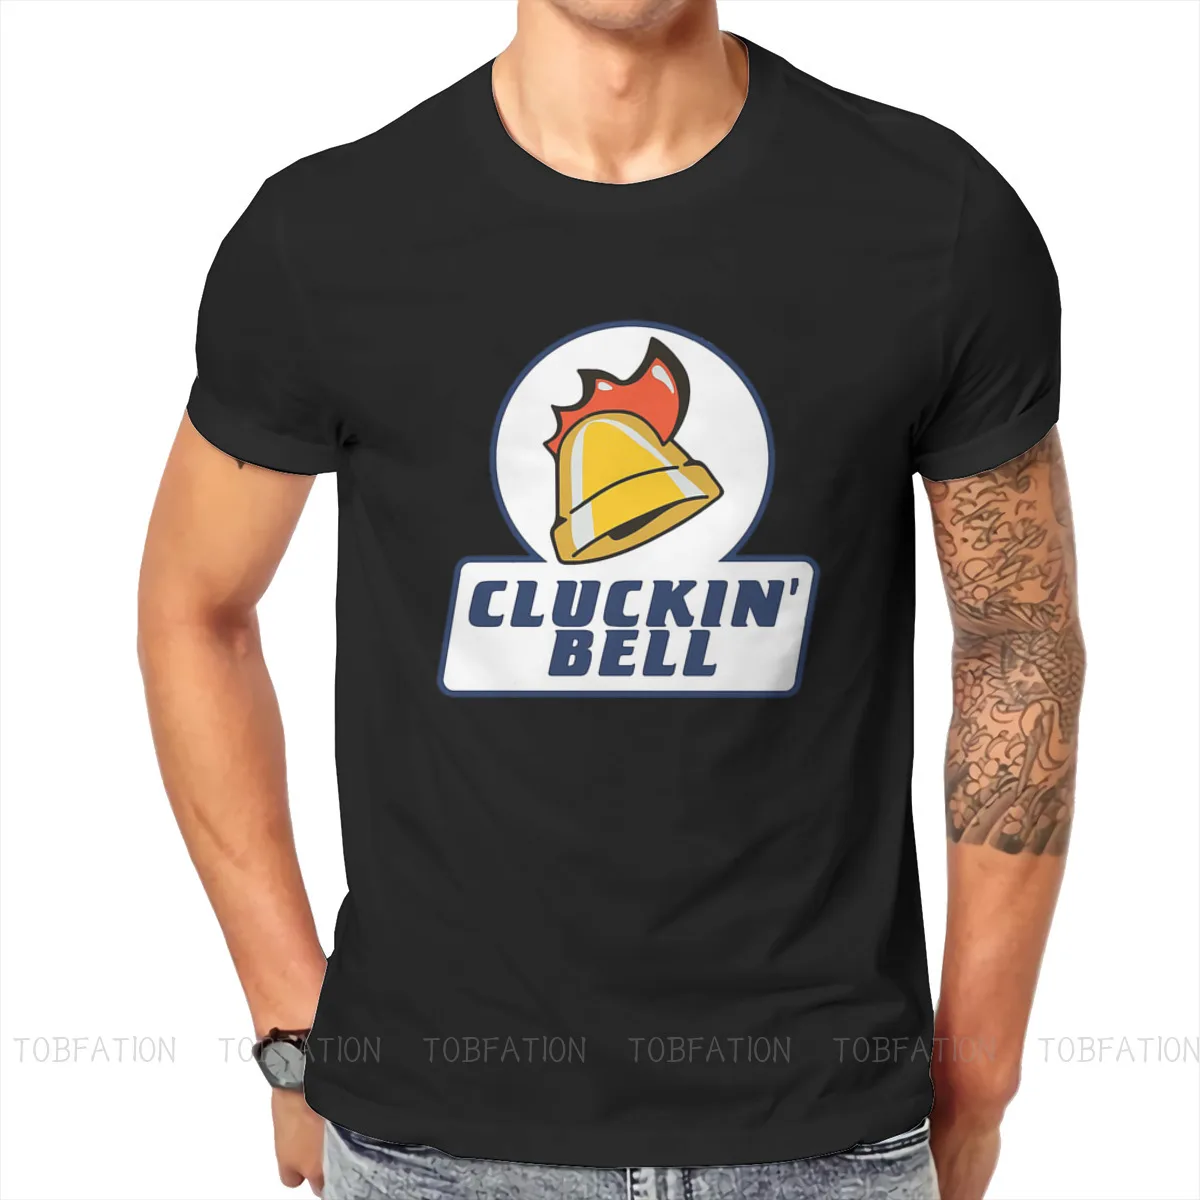 GTA Vice City-Camiseta de Cluckin' Bell para hombre, Camiseta estampada de talla grande Harajuku, ropa de cuello redondo 100% de algodón, gran oferta